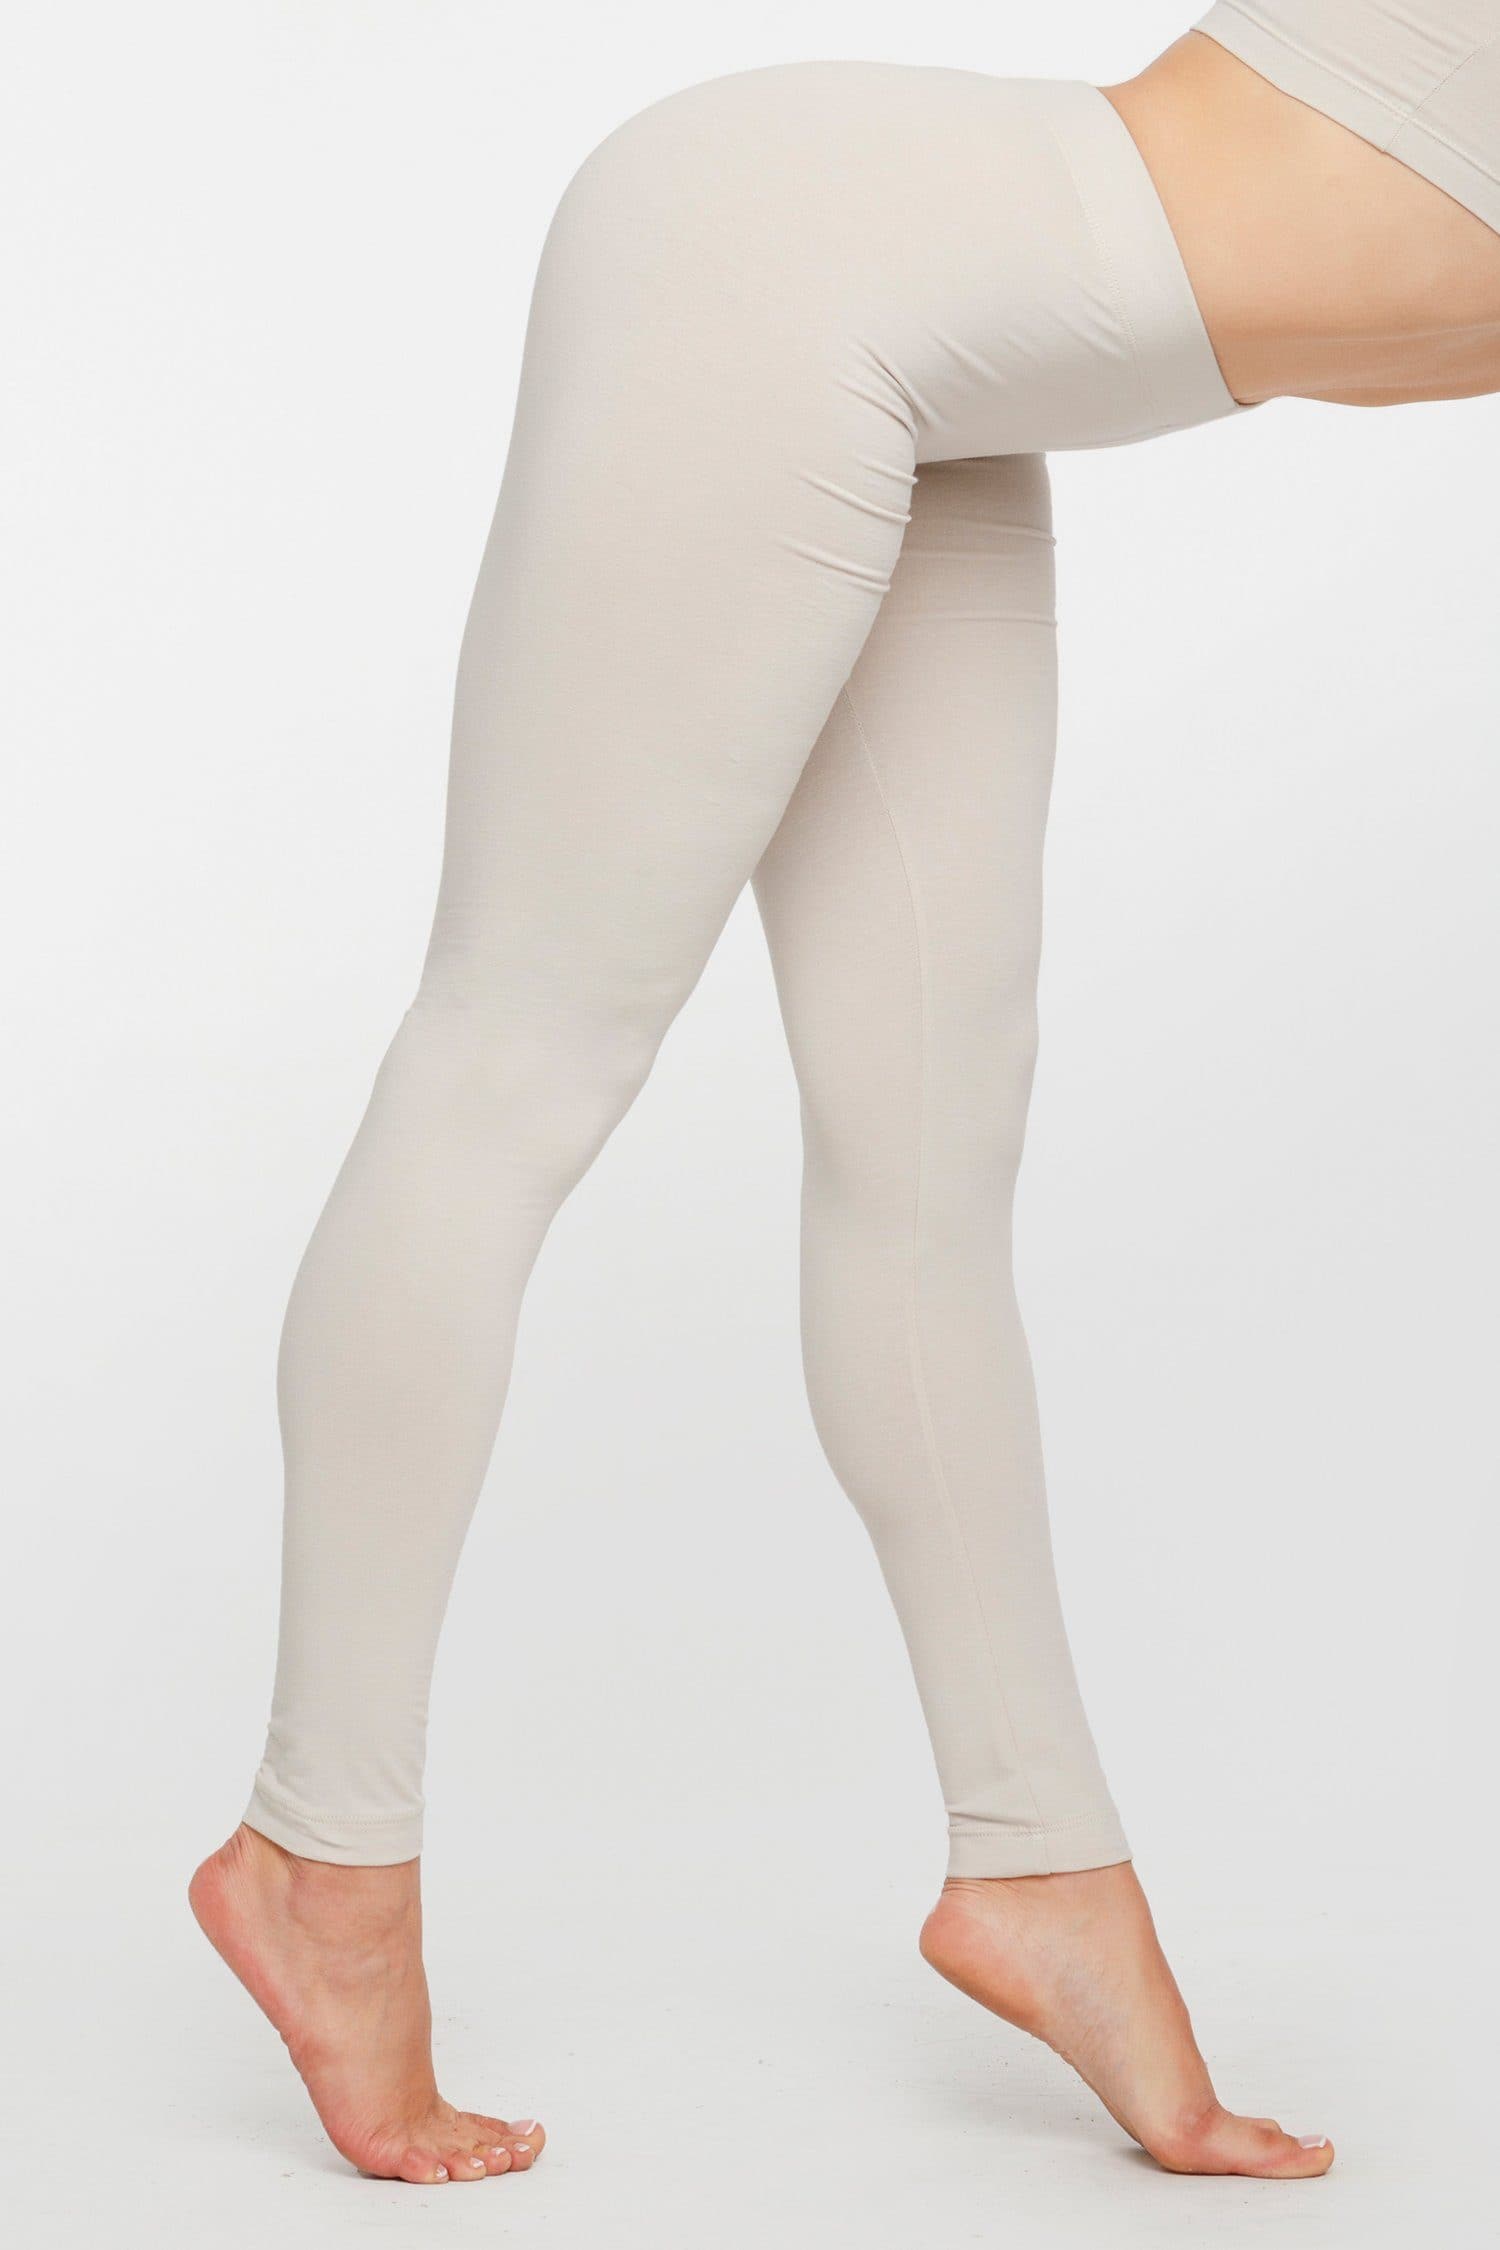 NWOT Hanes Women's Stretch Jersey Cotton Legging, L